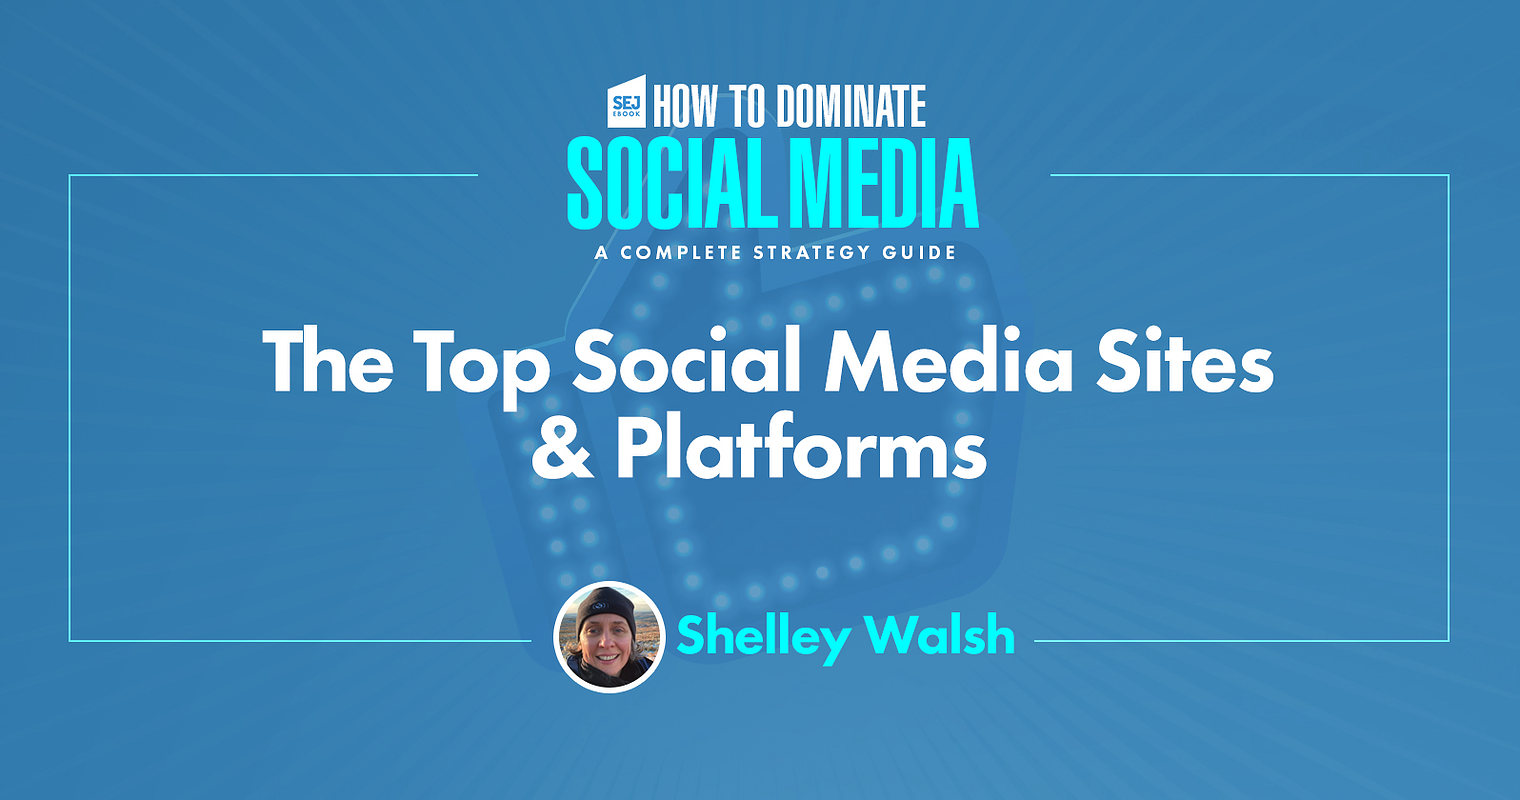 The Top 10 Social Media Sites & Platforms 2021